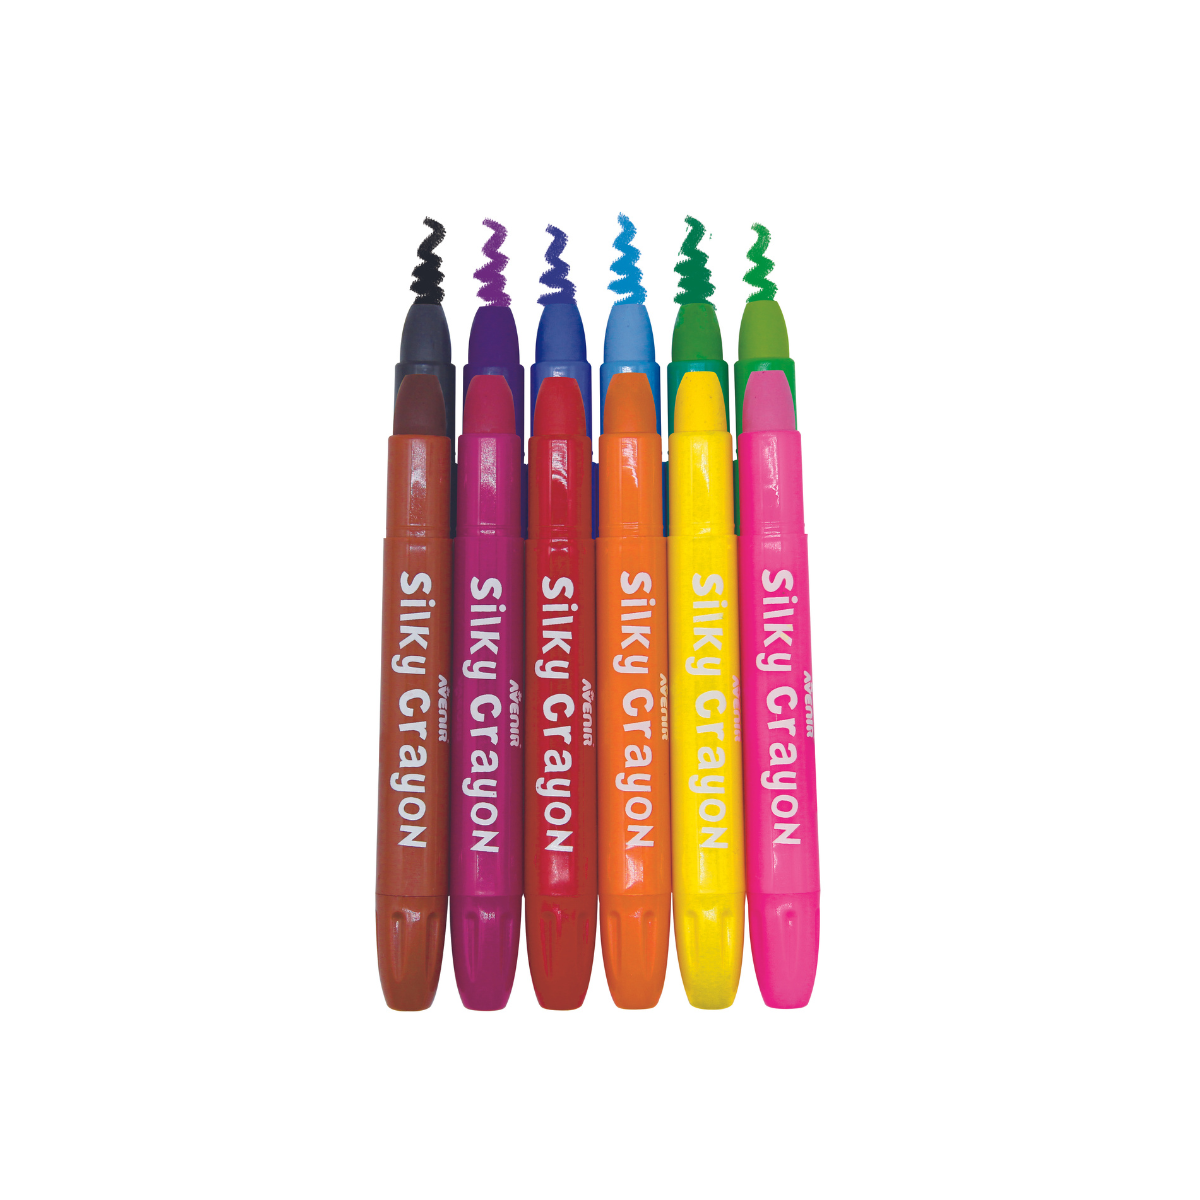 Crayones Silky x12 Avenir